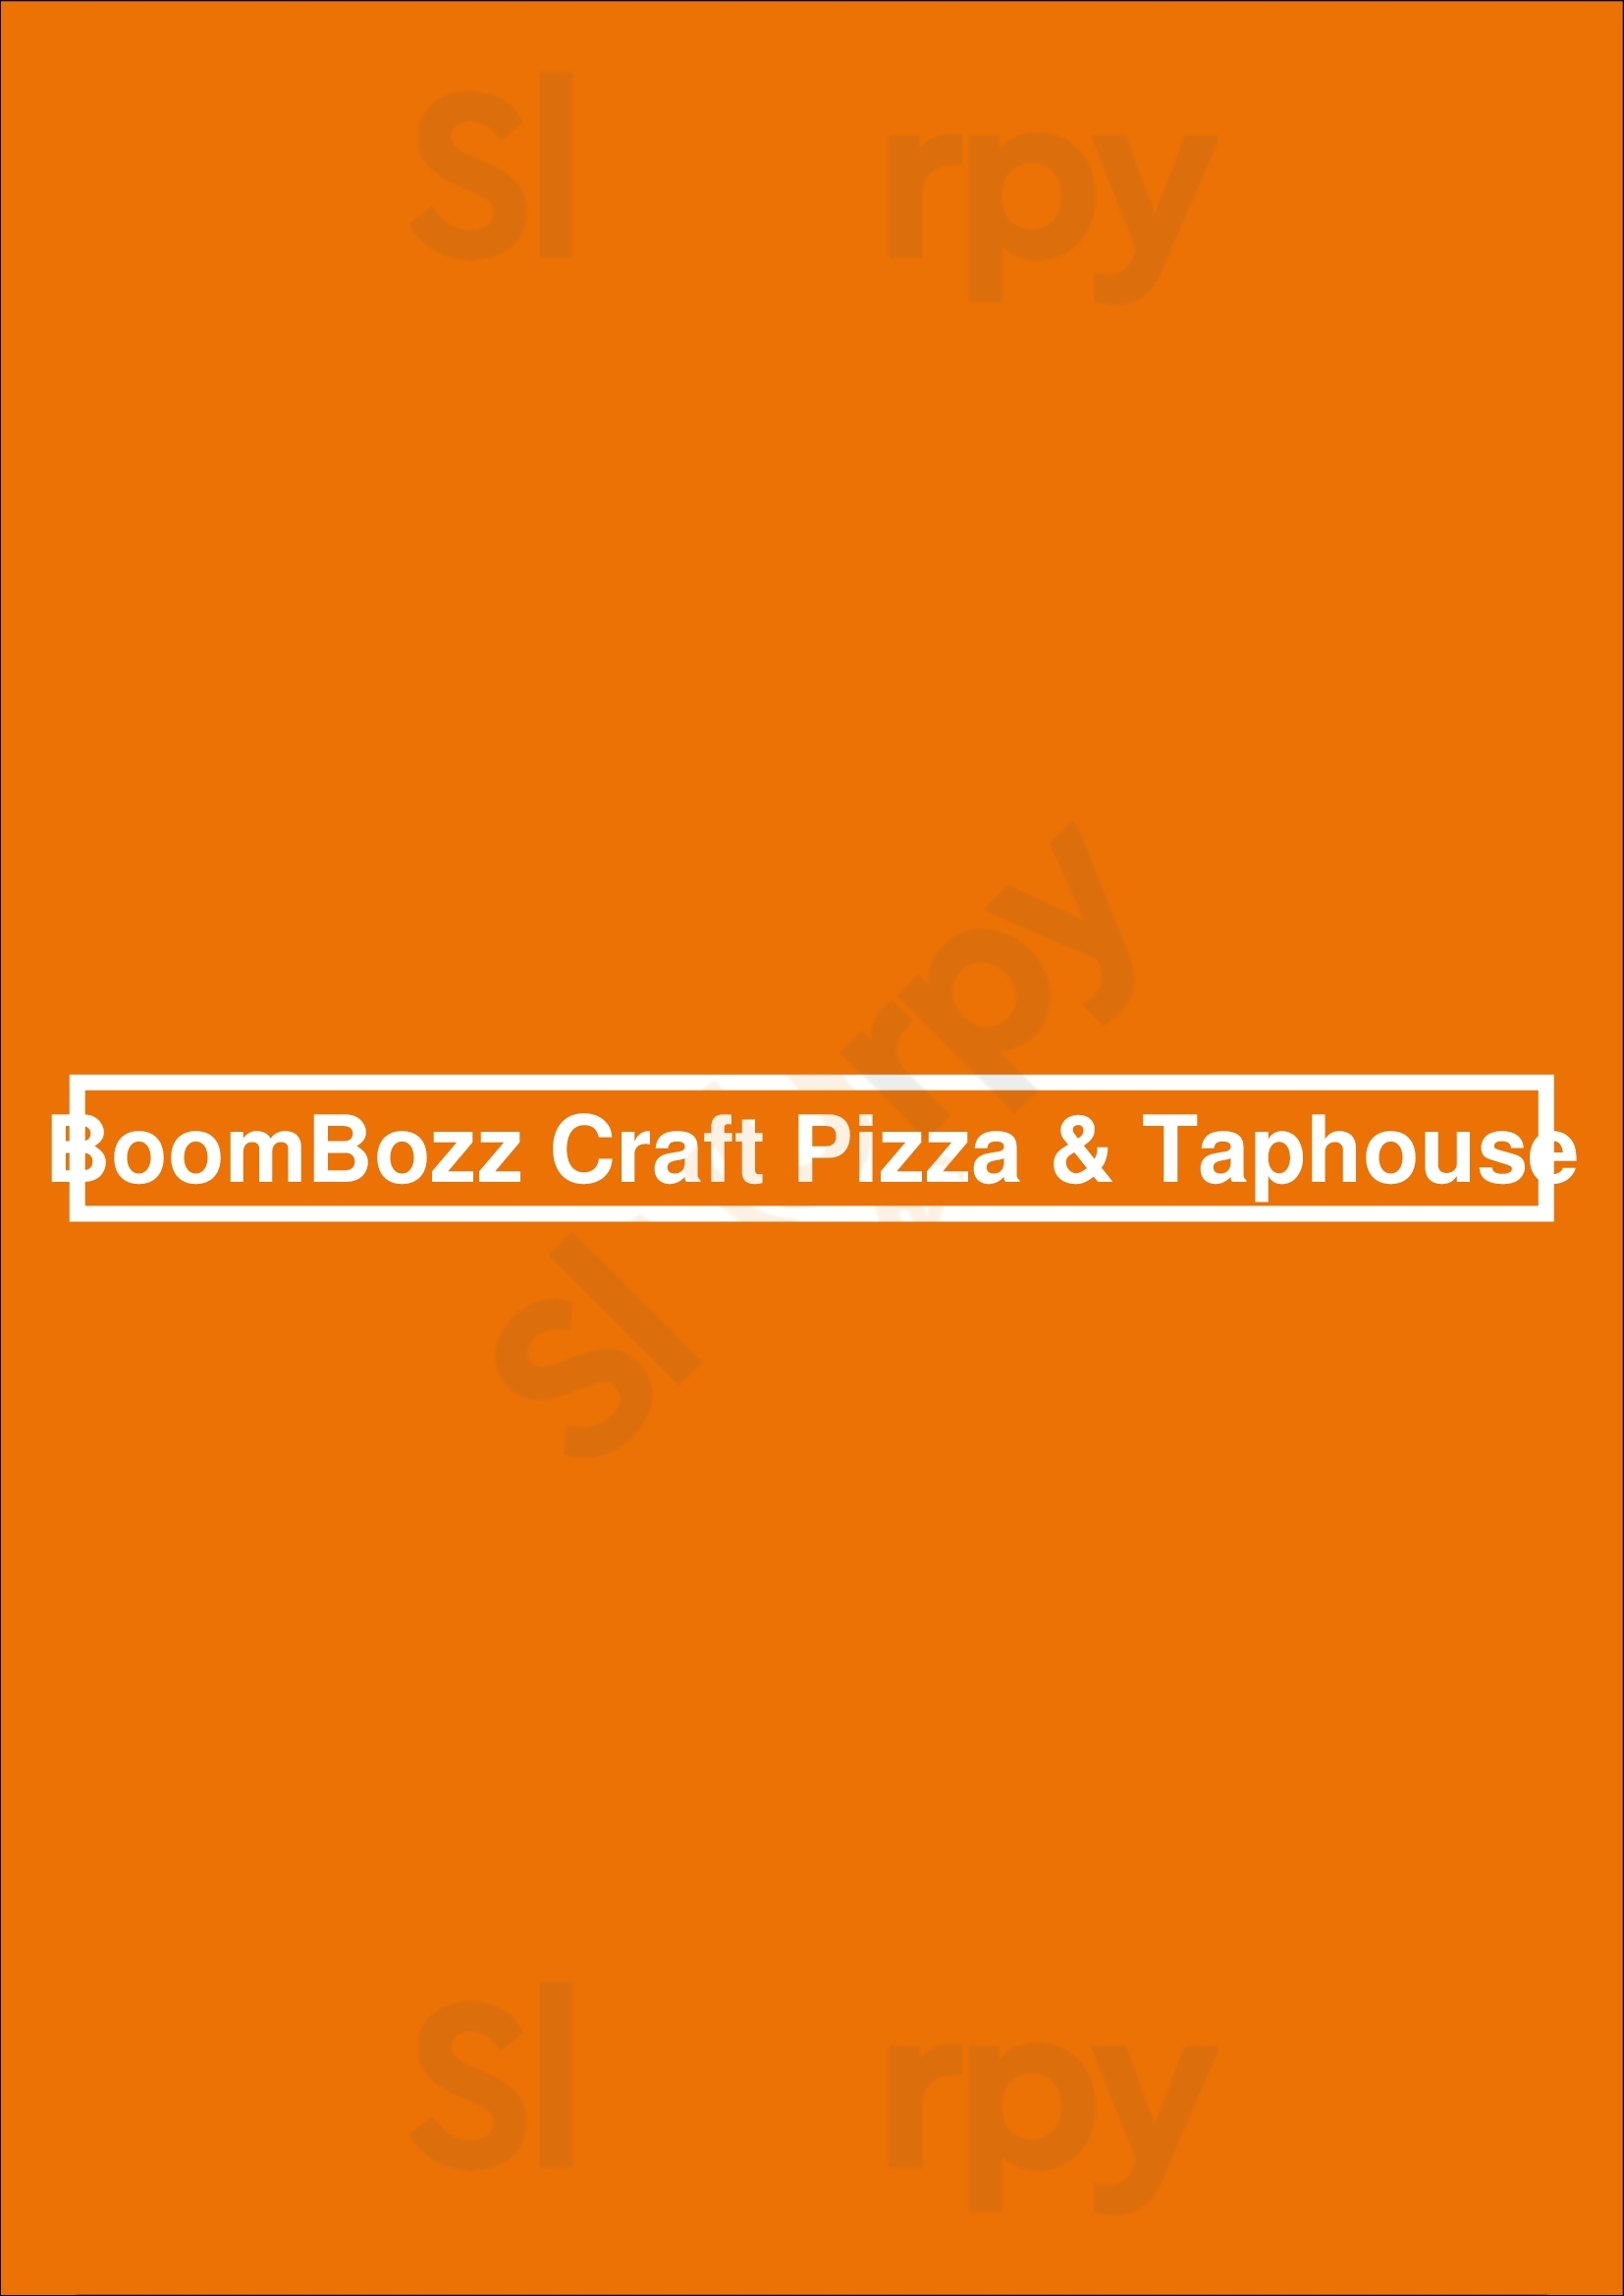 Boombozz Craft Pizza & Taphouse Nashville Menu - 1